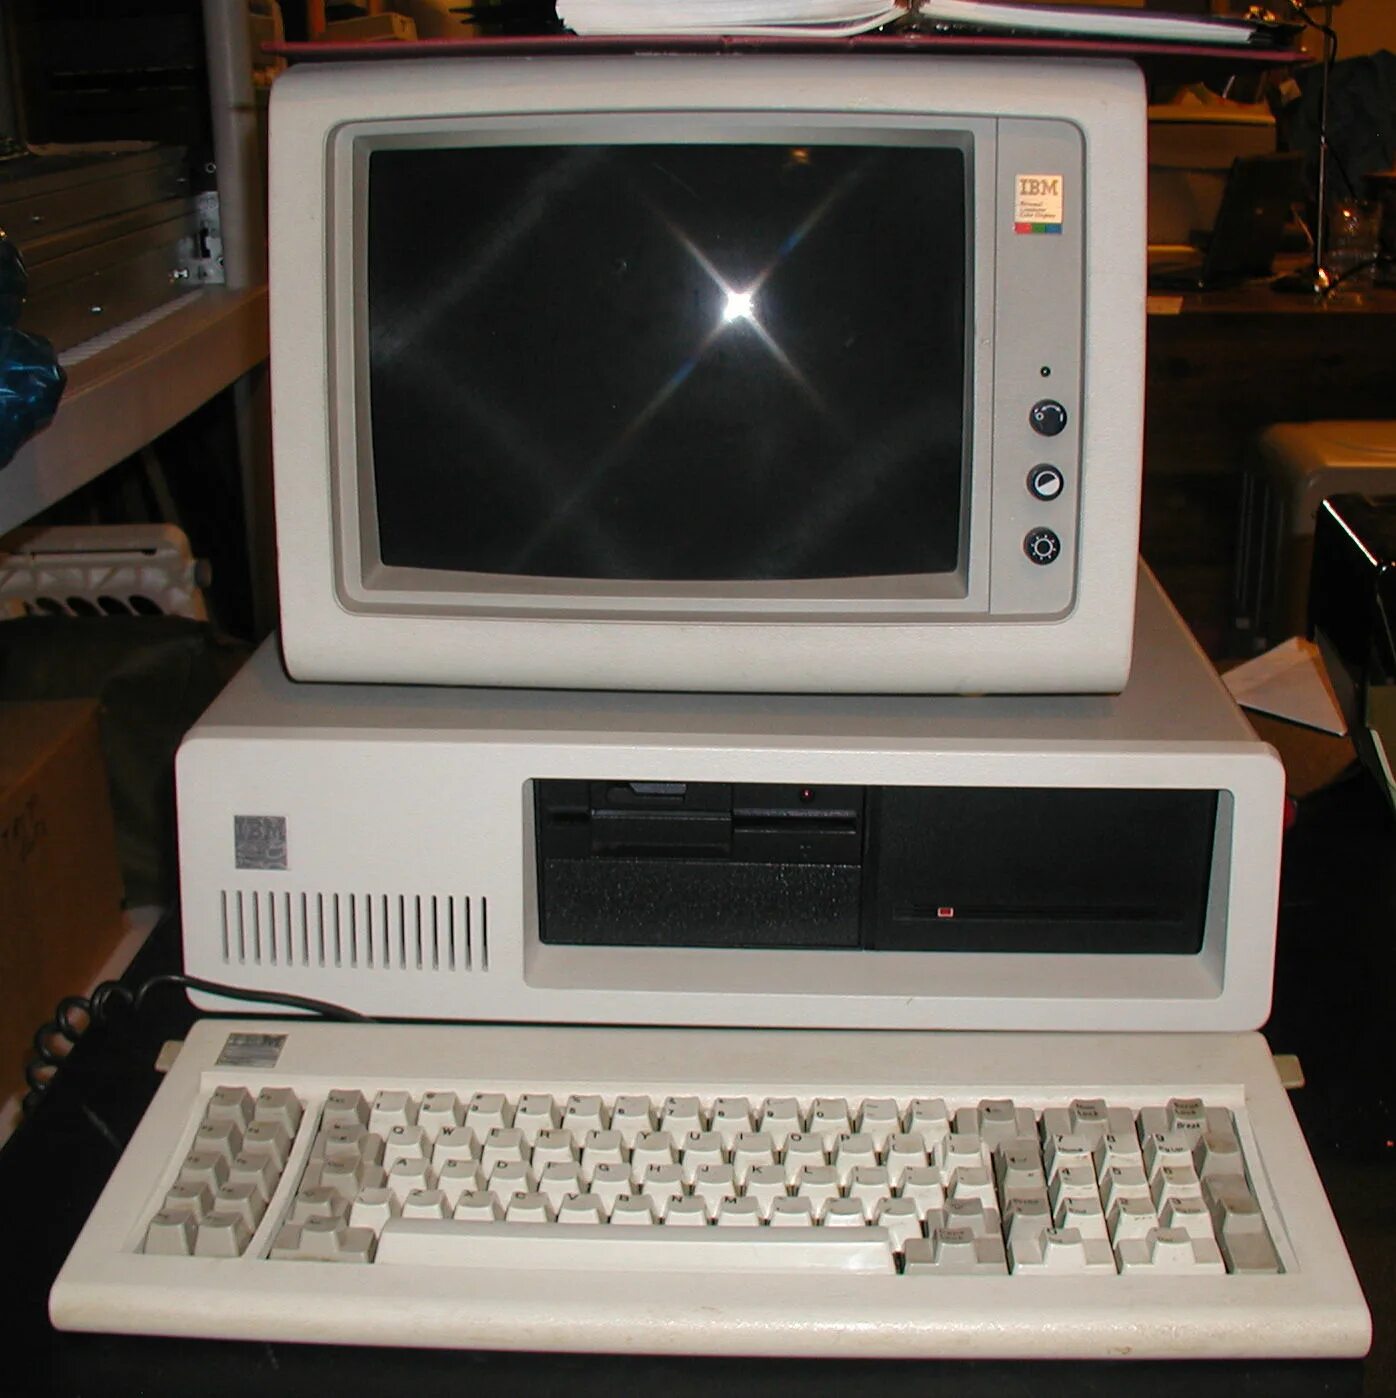 Ibm xt. IBM PC XT 5160. IBM PC XT 286. Компьютер IBM XT 8086. IBM PC model 5160.